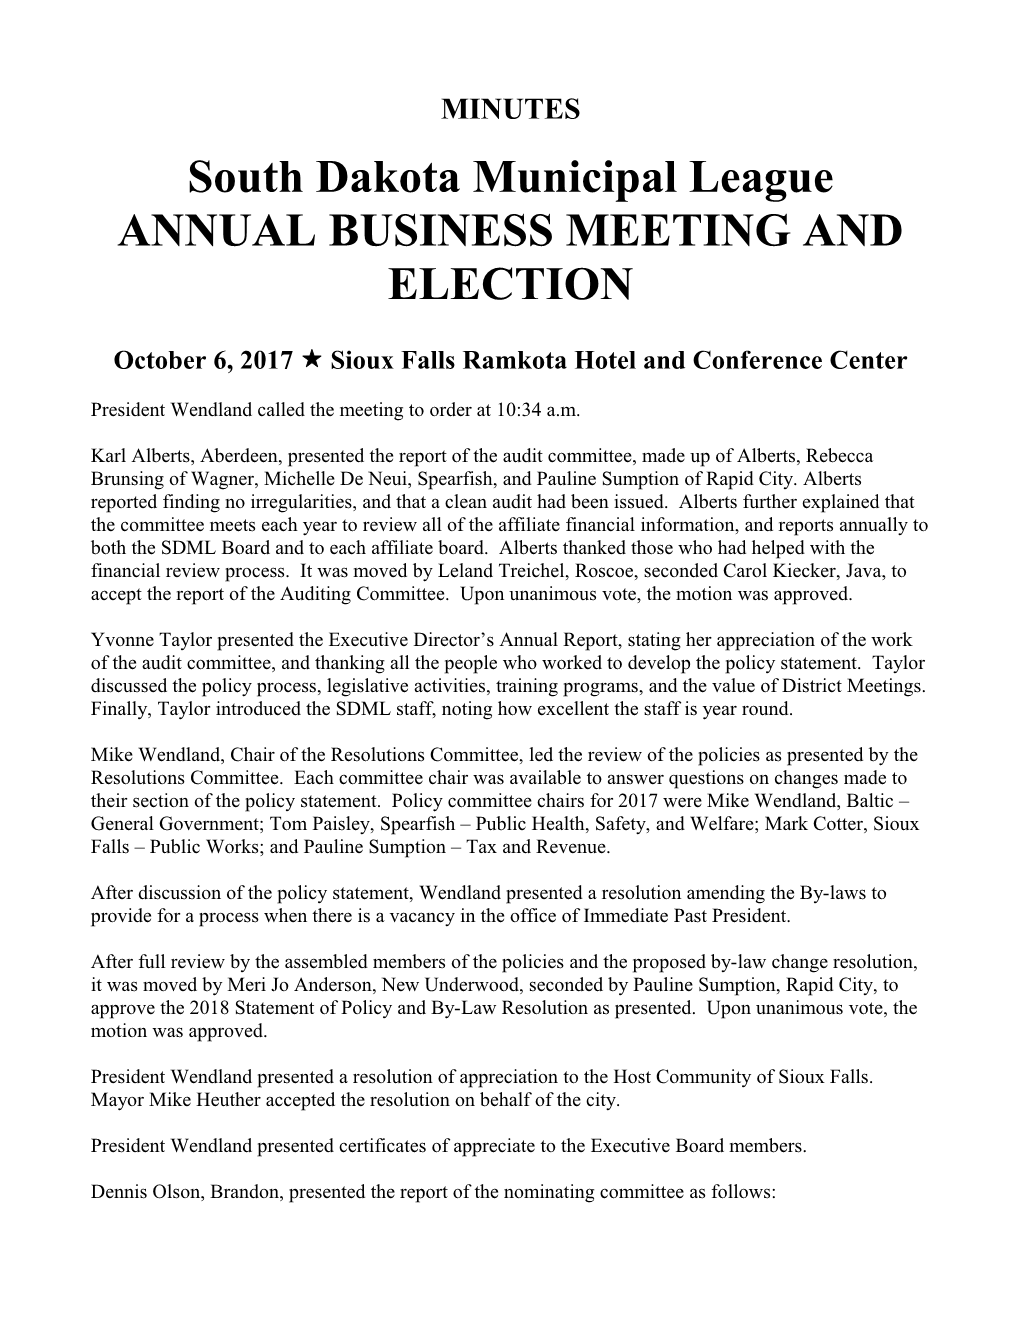 South Dakota Municipal League